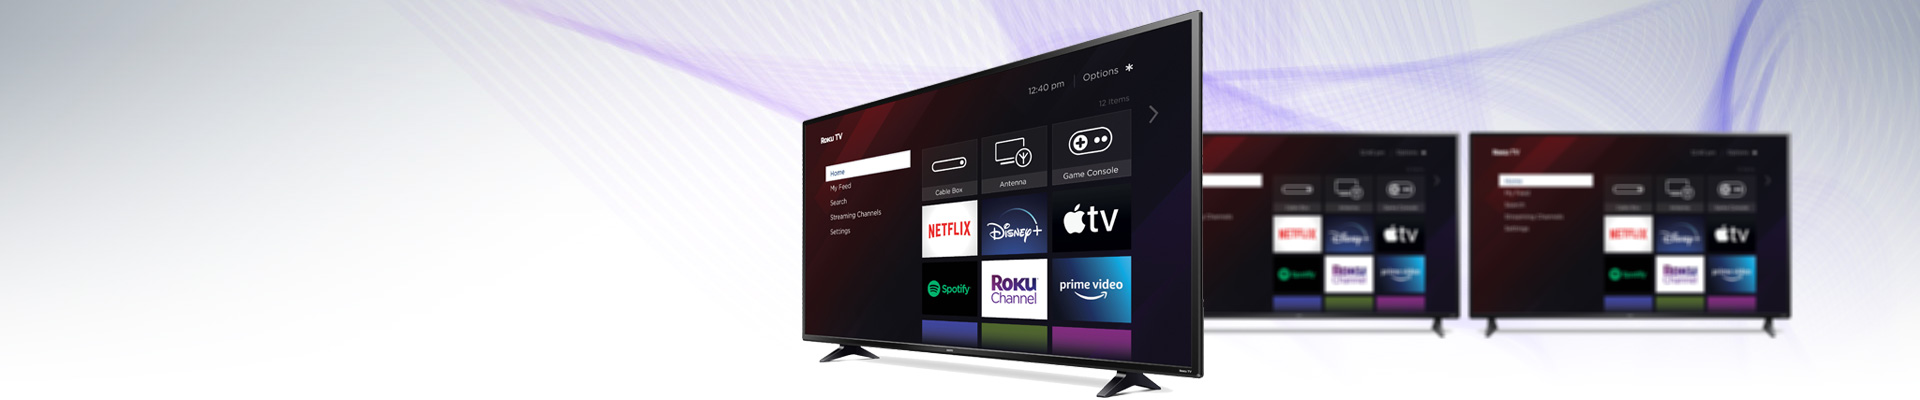 SANYO AV Products LED TV, Soundbar, Blu-ray Disc Players, DVD